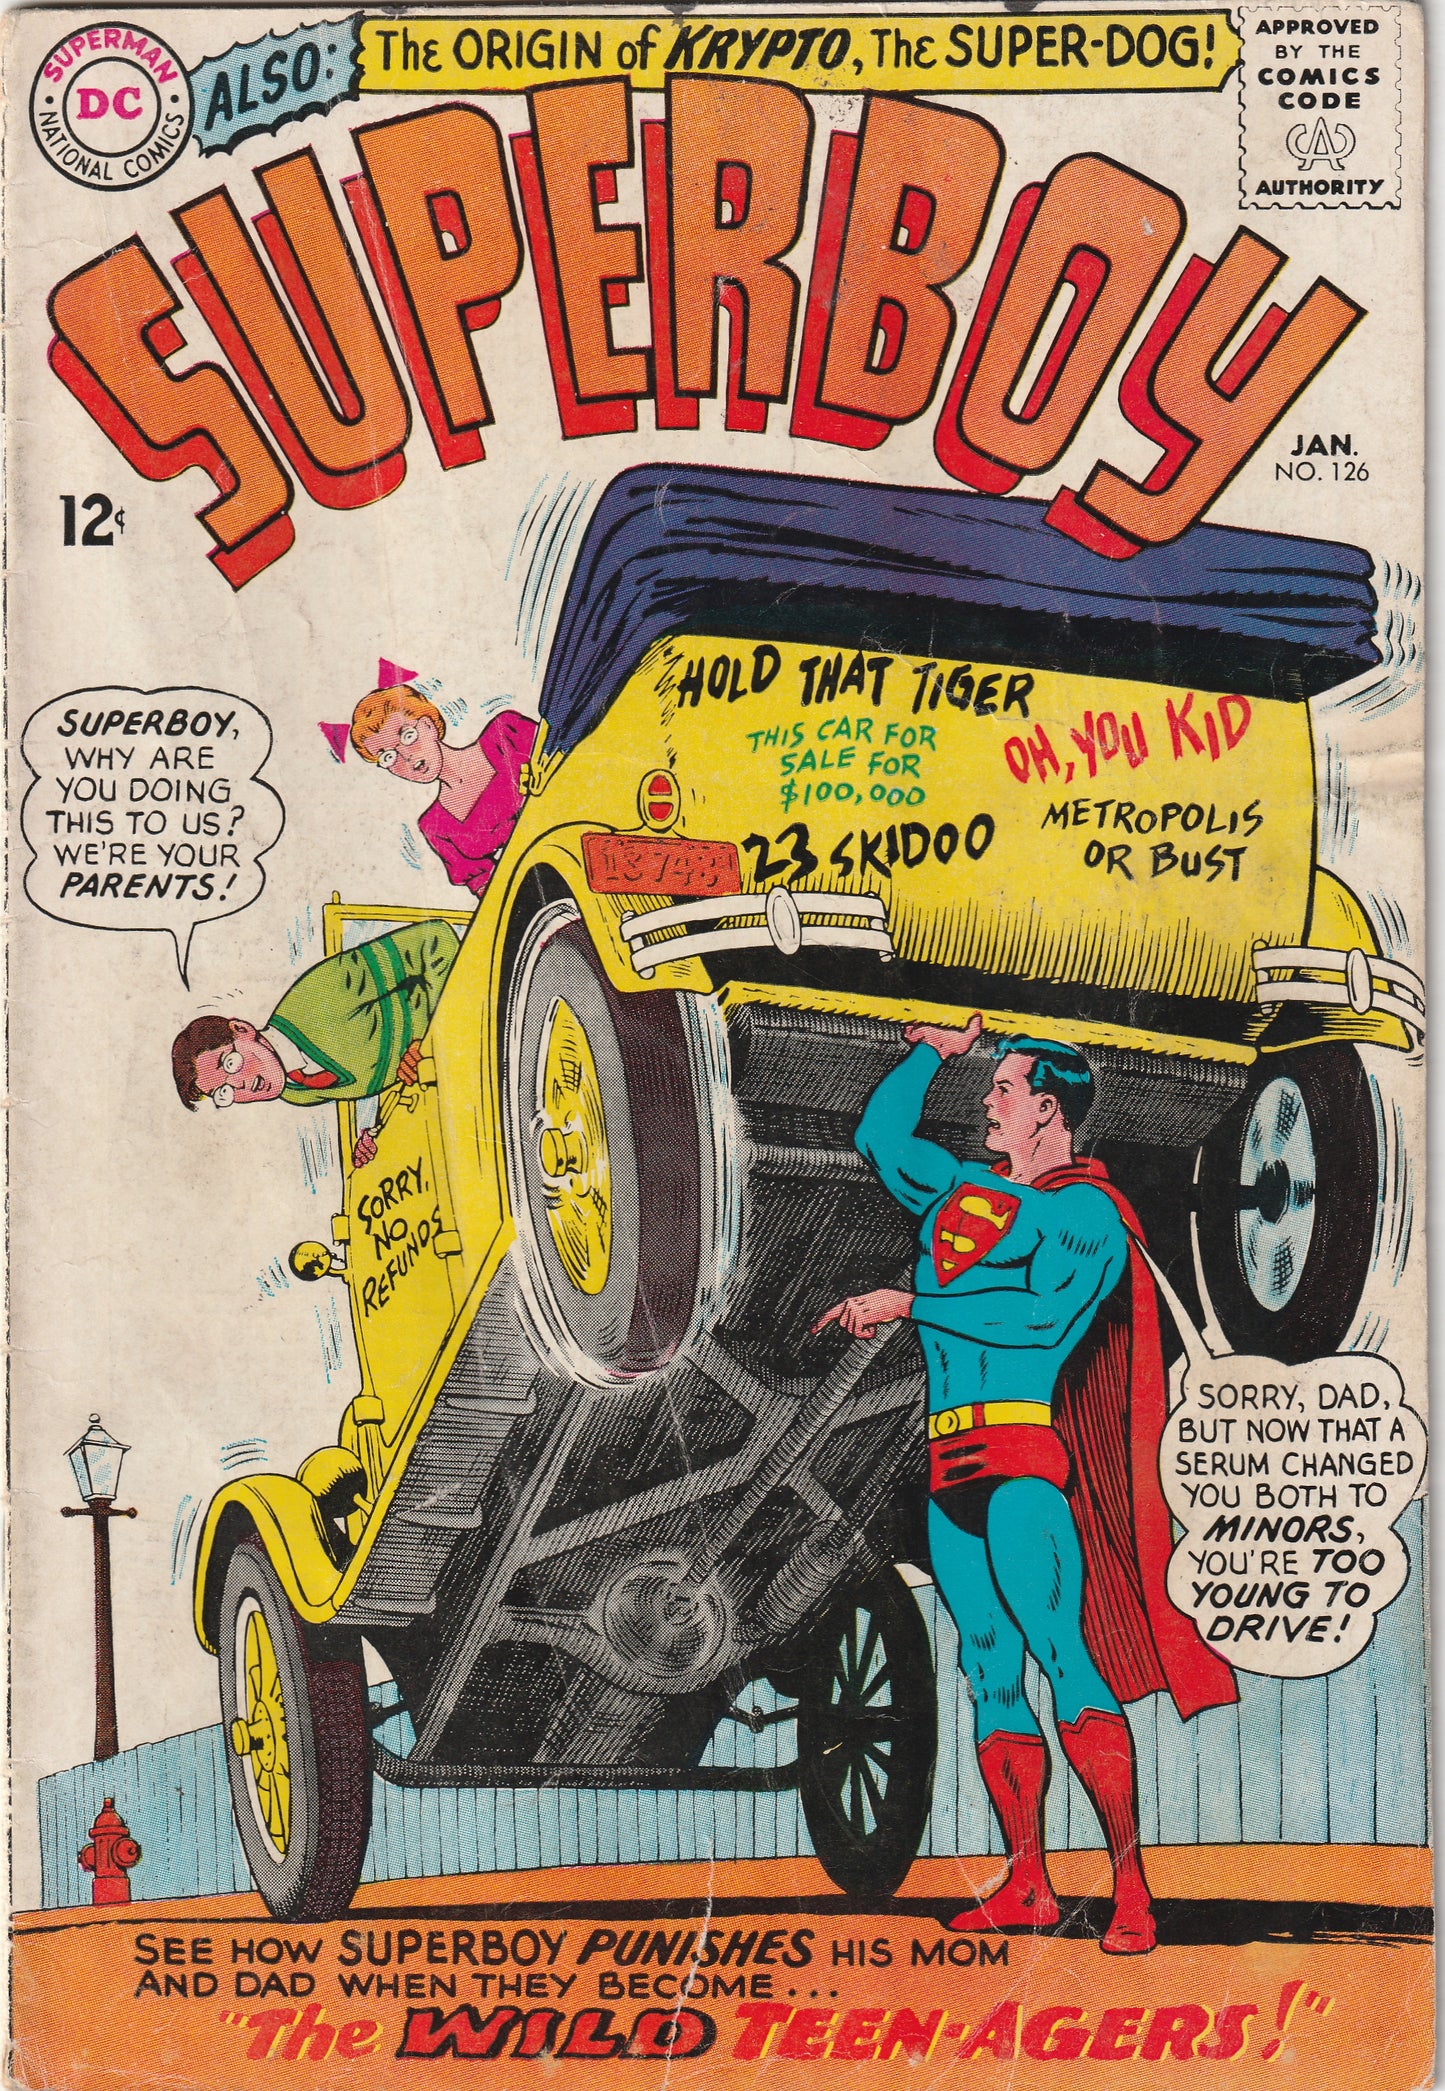 Superboy #126 (1965) - Origin of Krypto the Super Dog retold